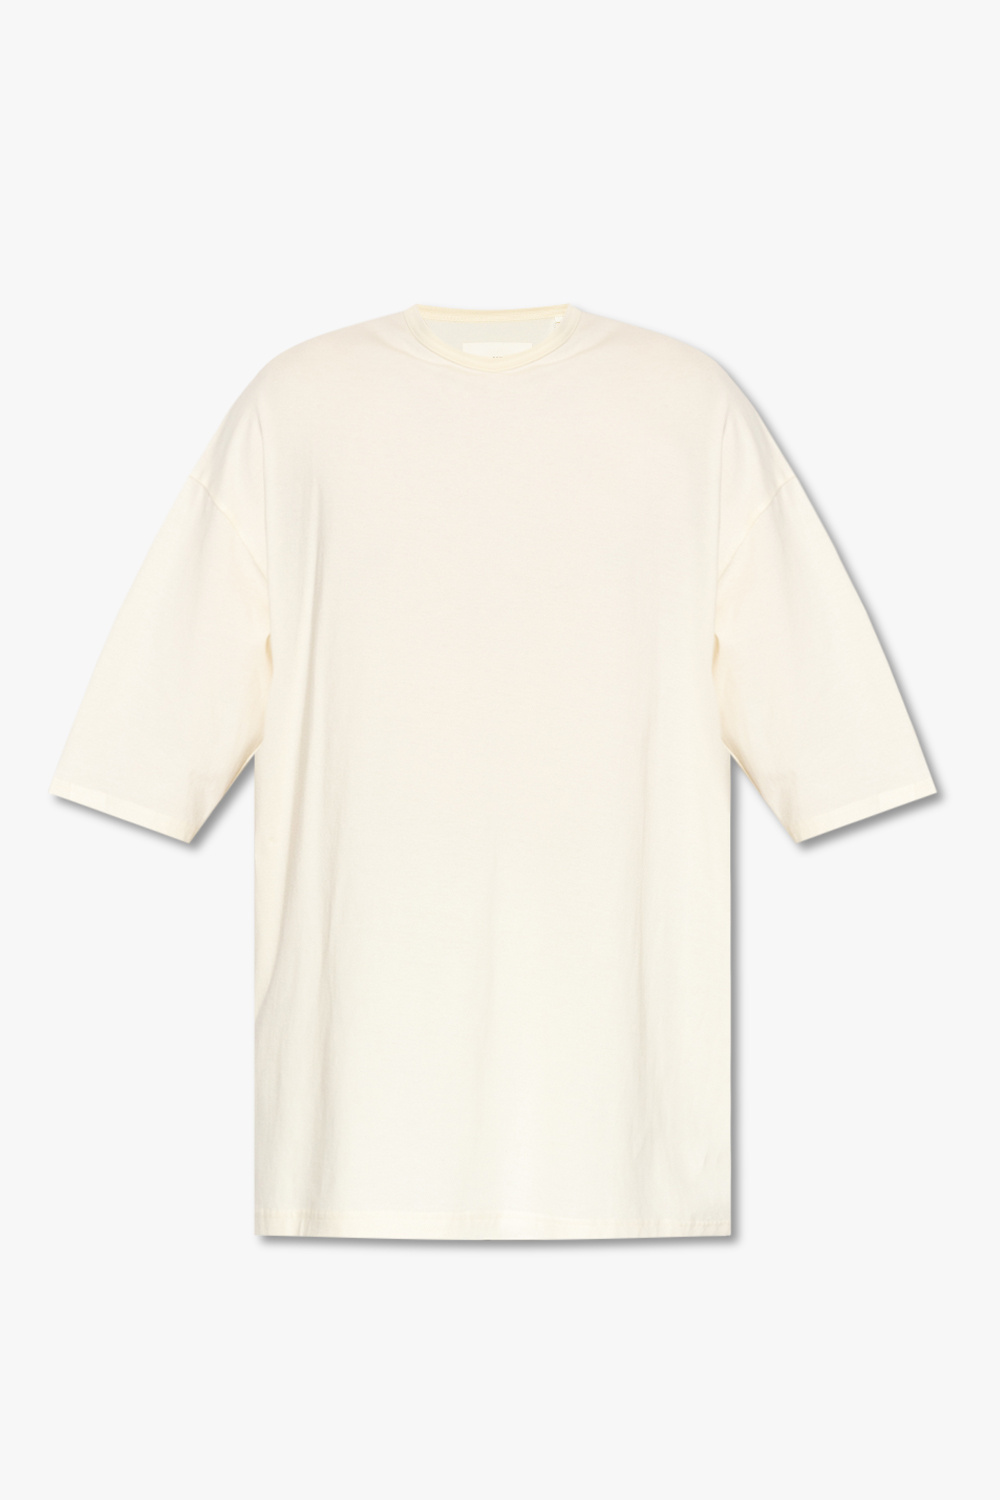 Cream Asymmetrical shirt Y-3 Yohji Yamamoto - Vitkac Italy